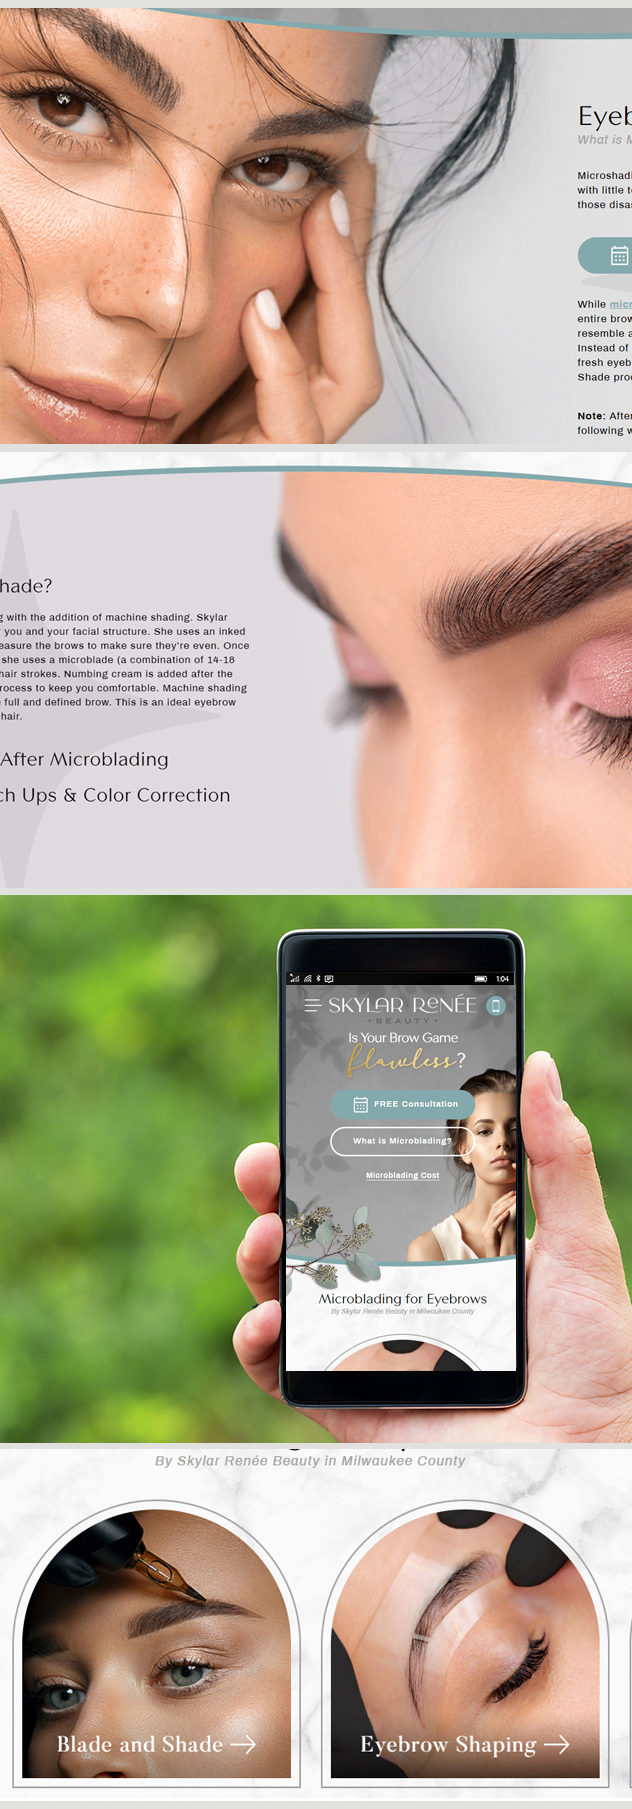 Milwaukee web marketing for Skylar Renee Beauty